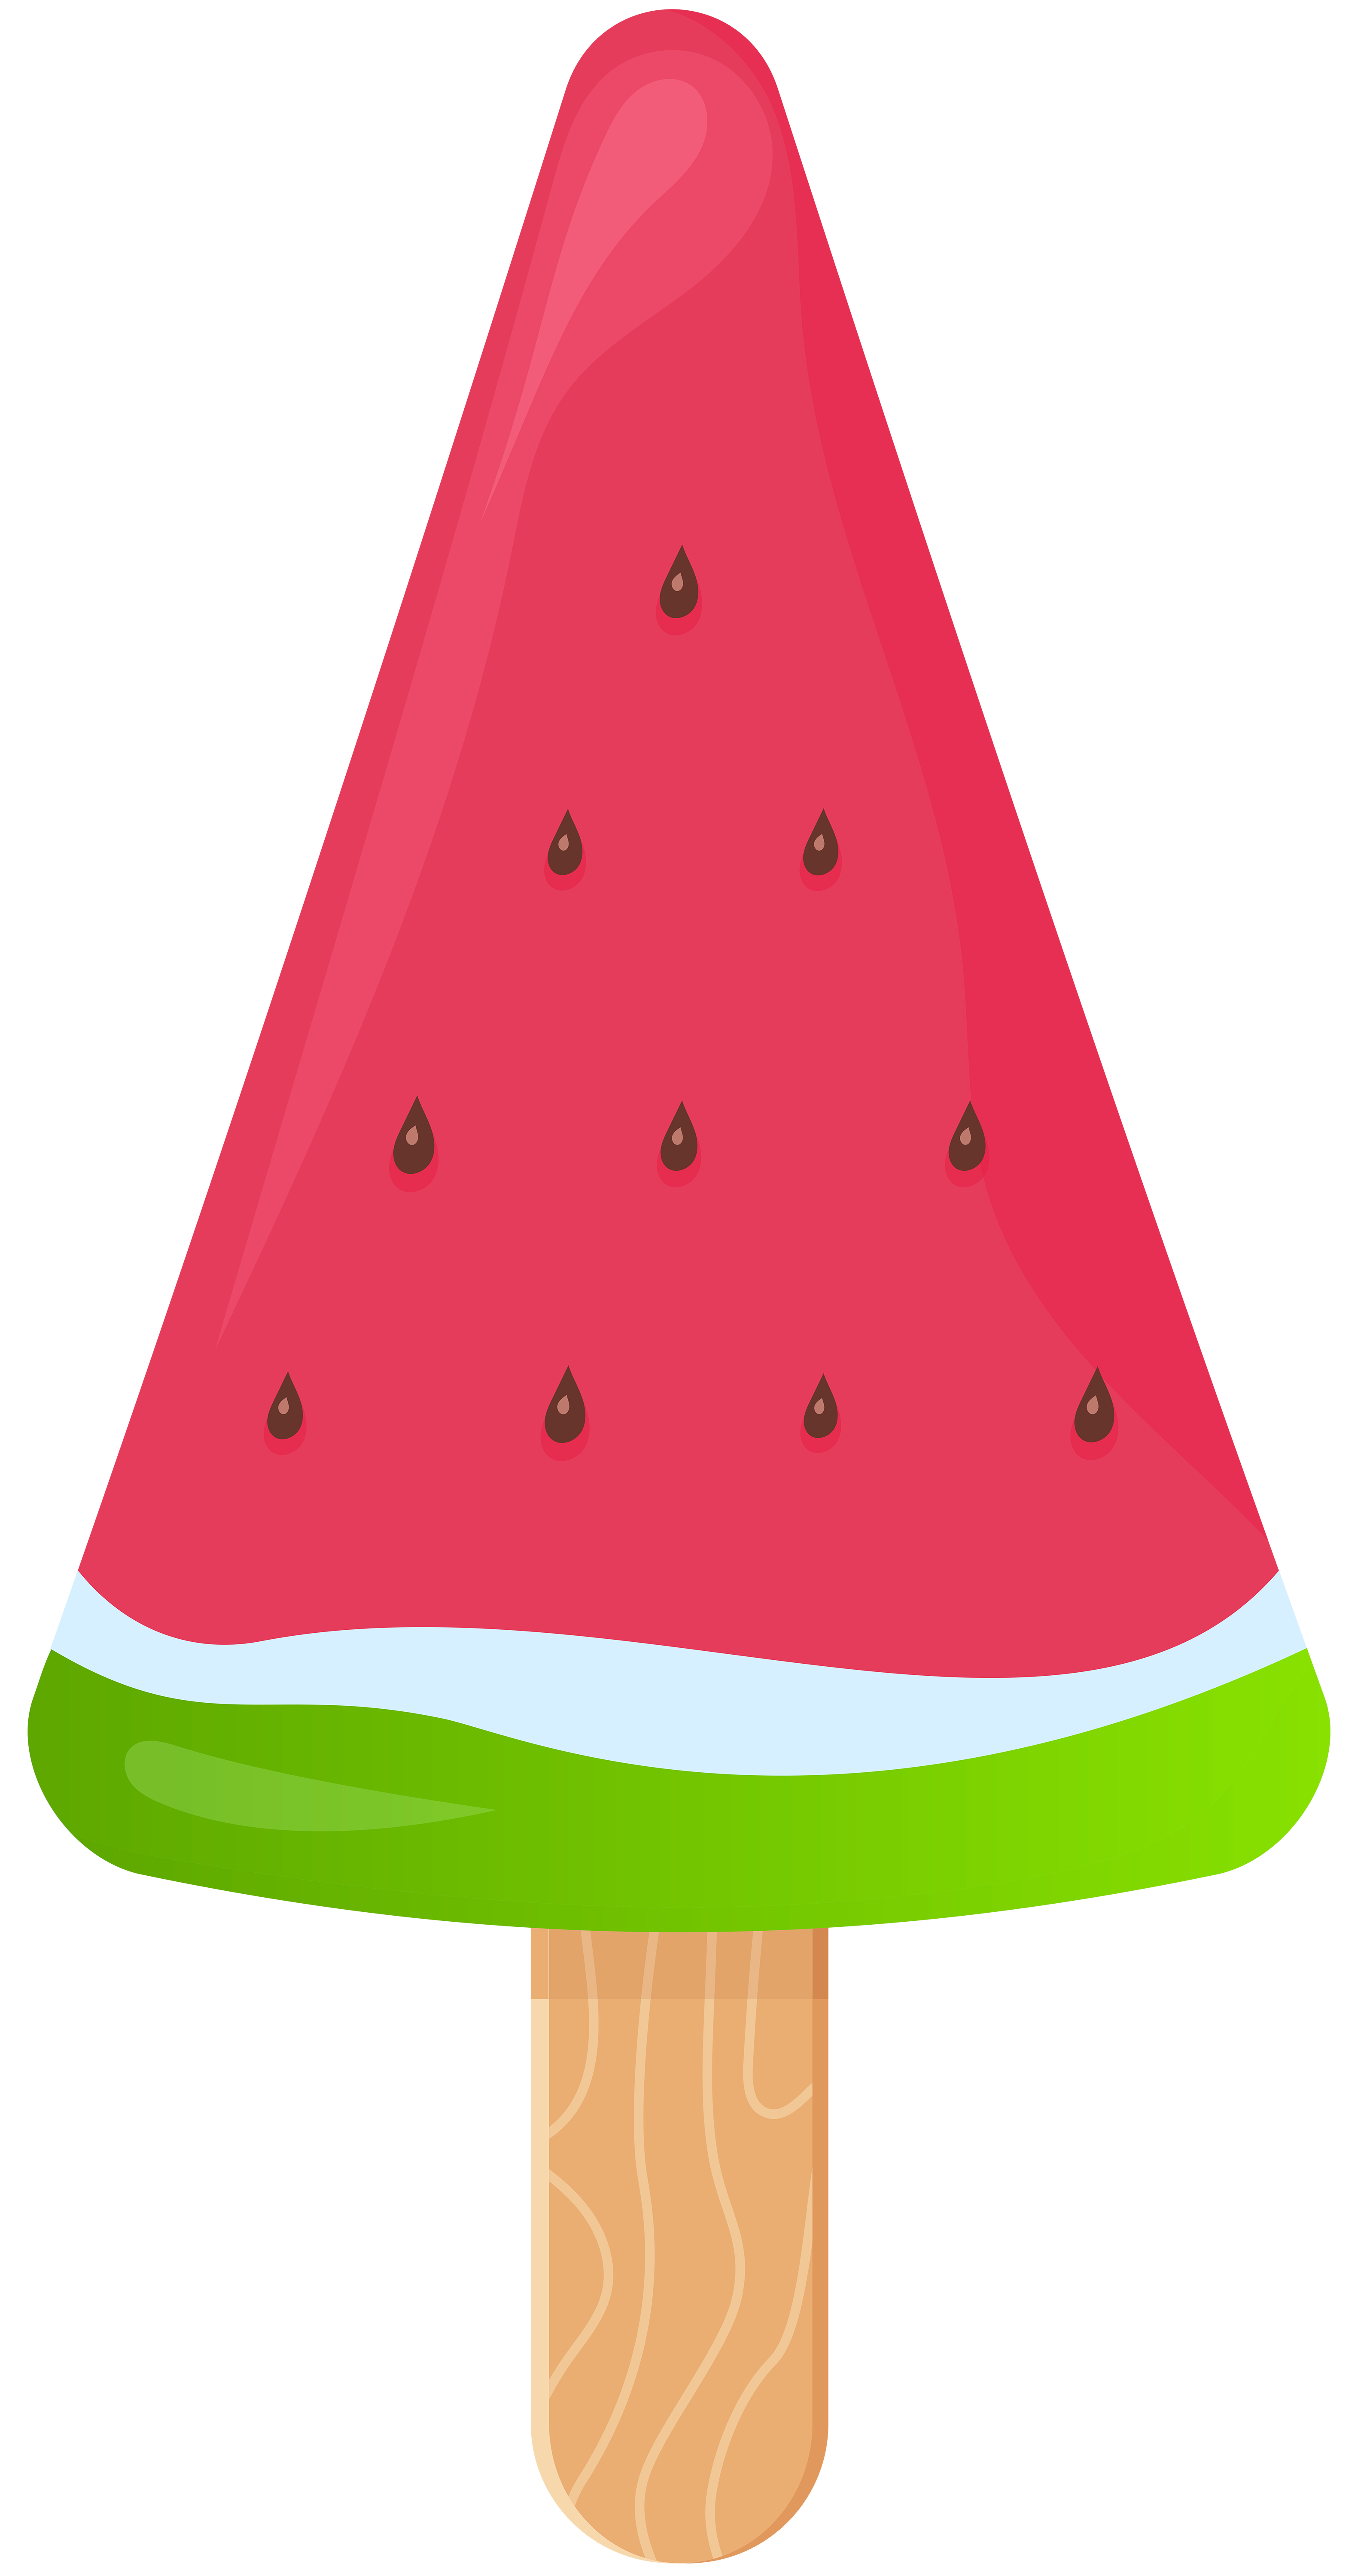 Icecream clipart red. Design watermelon frames illustrations